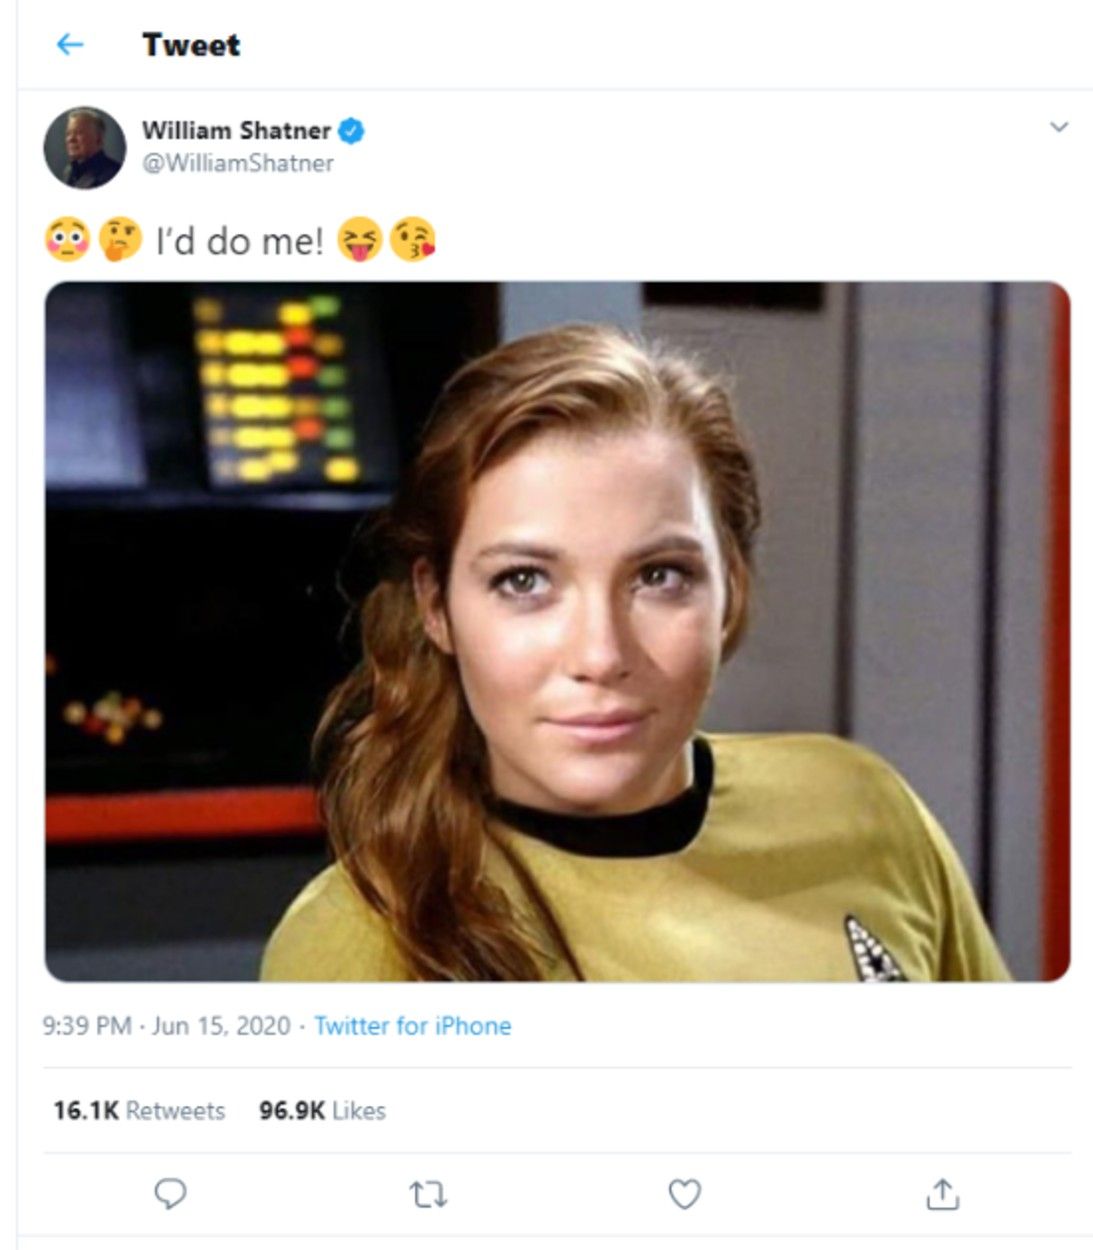 William Shatner tweet about female Captain Kirk from Star Trek: TOS